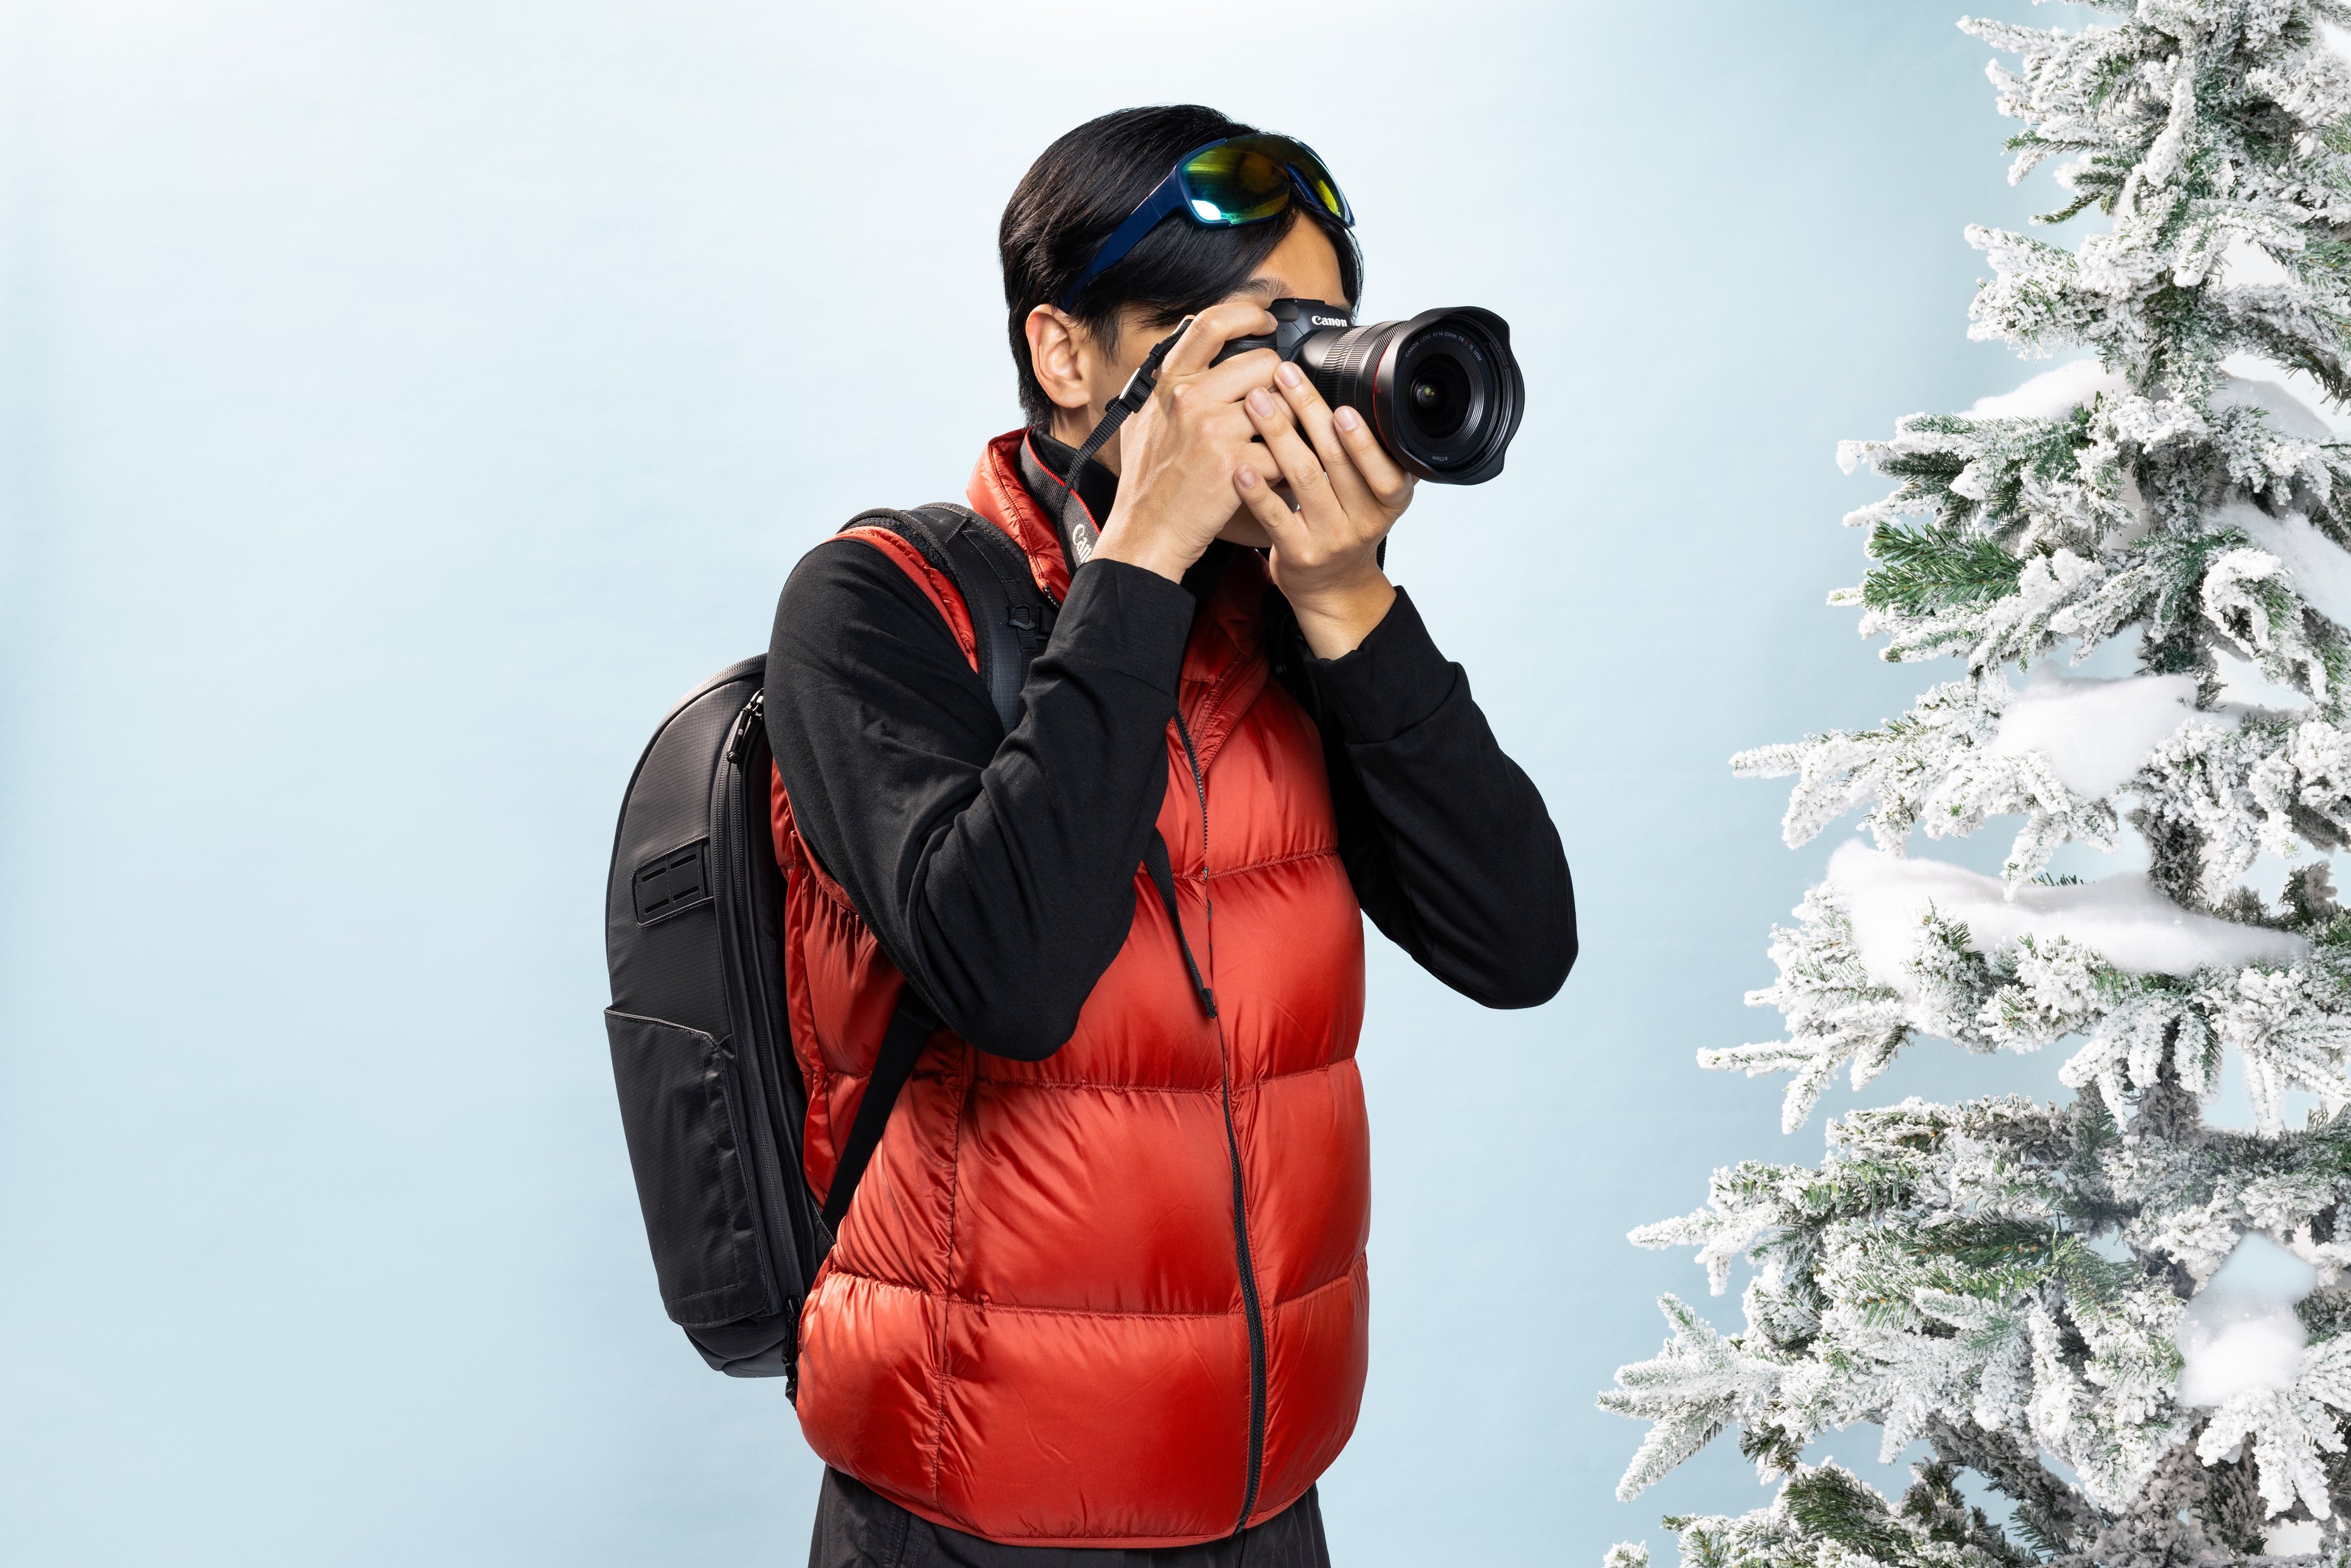 Canon EOS R5 Mirrorless Digital Camera Body